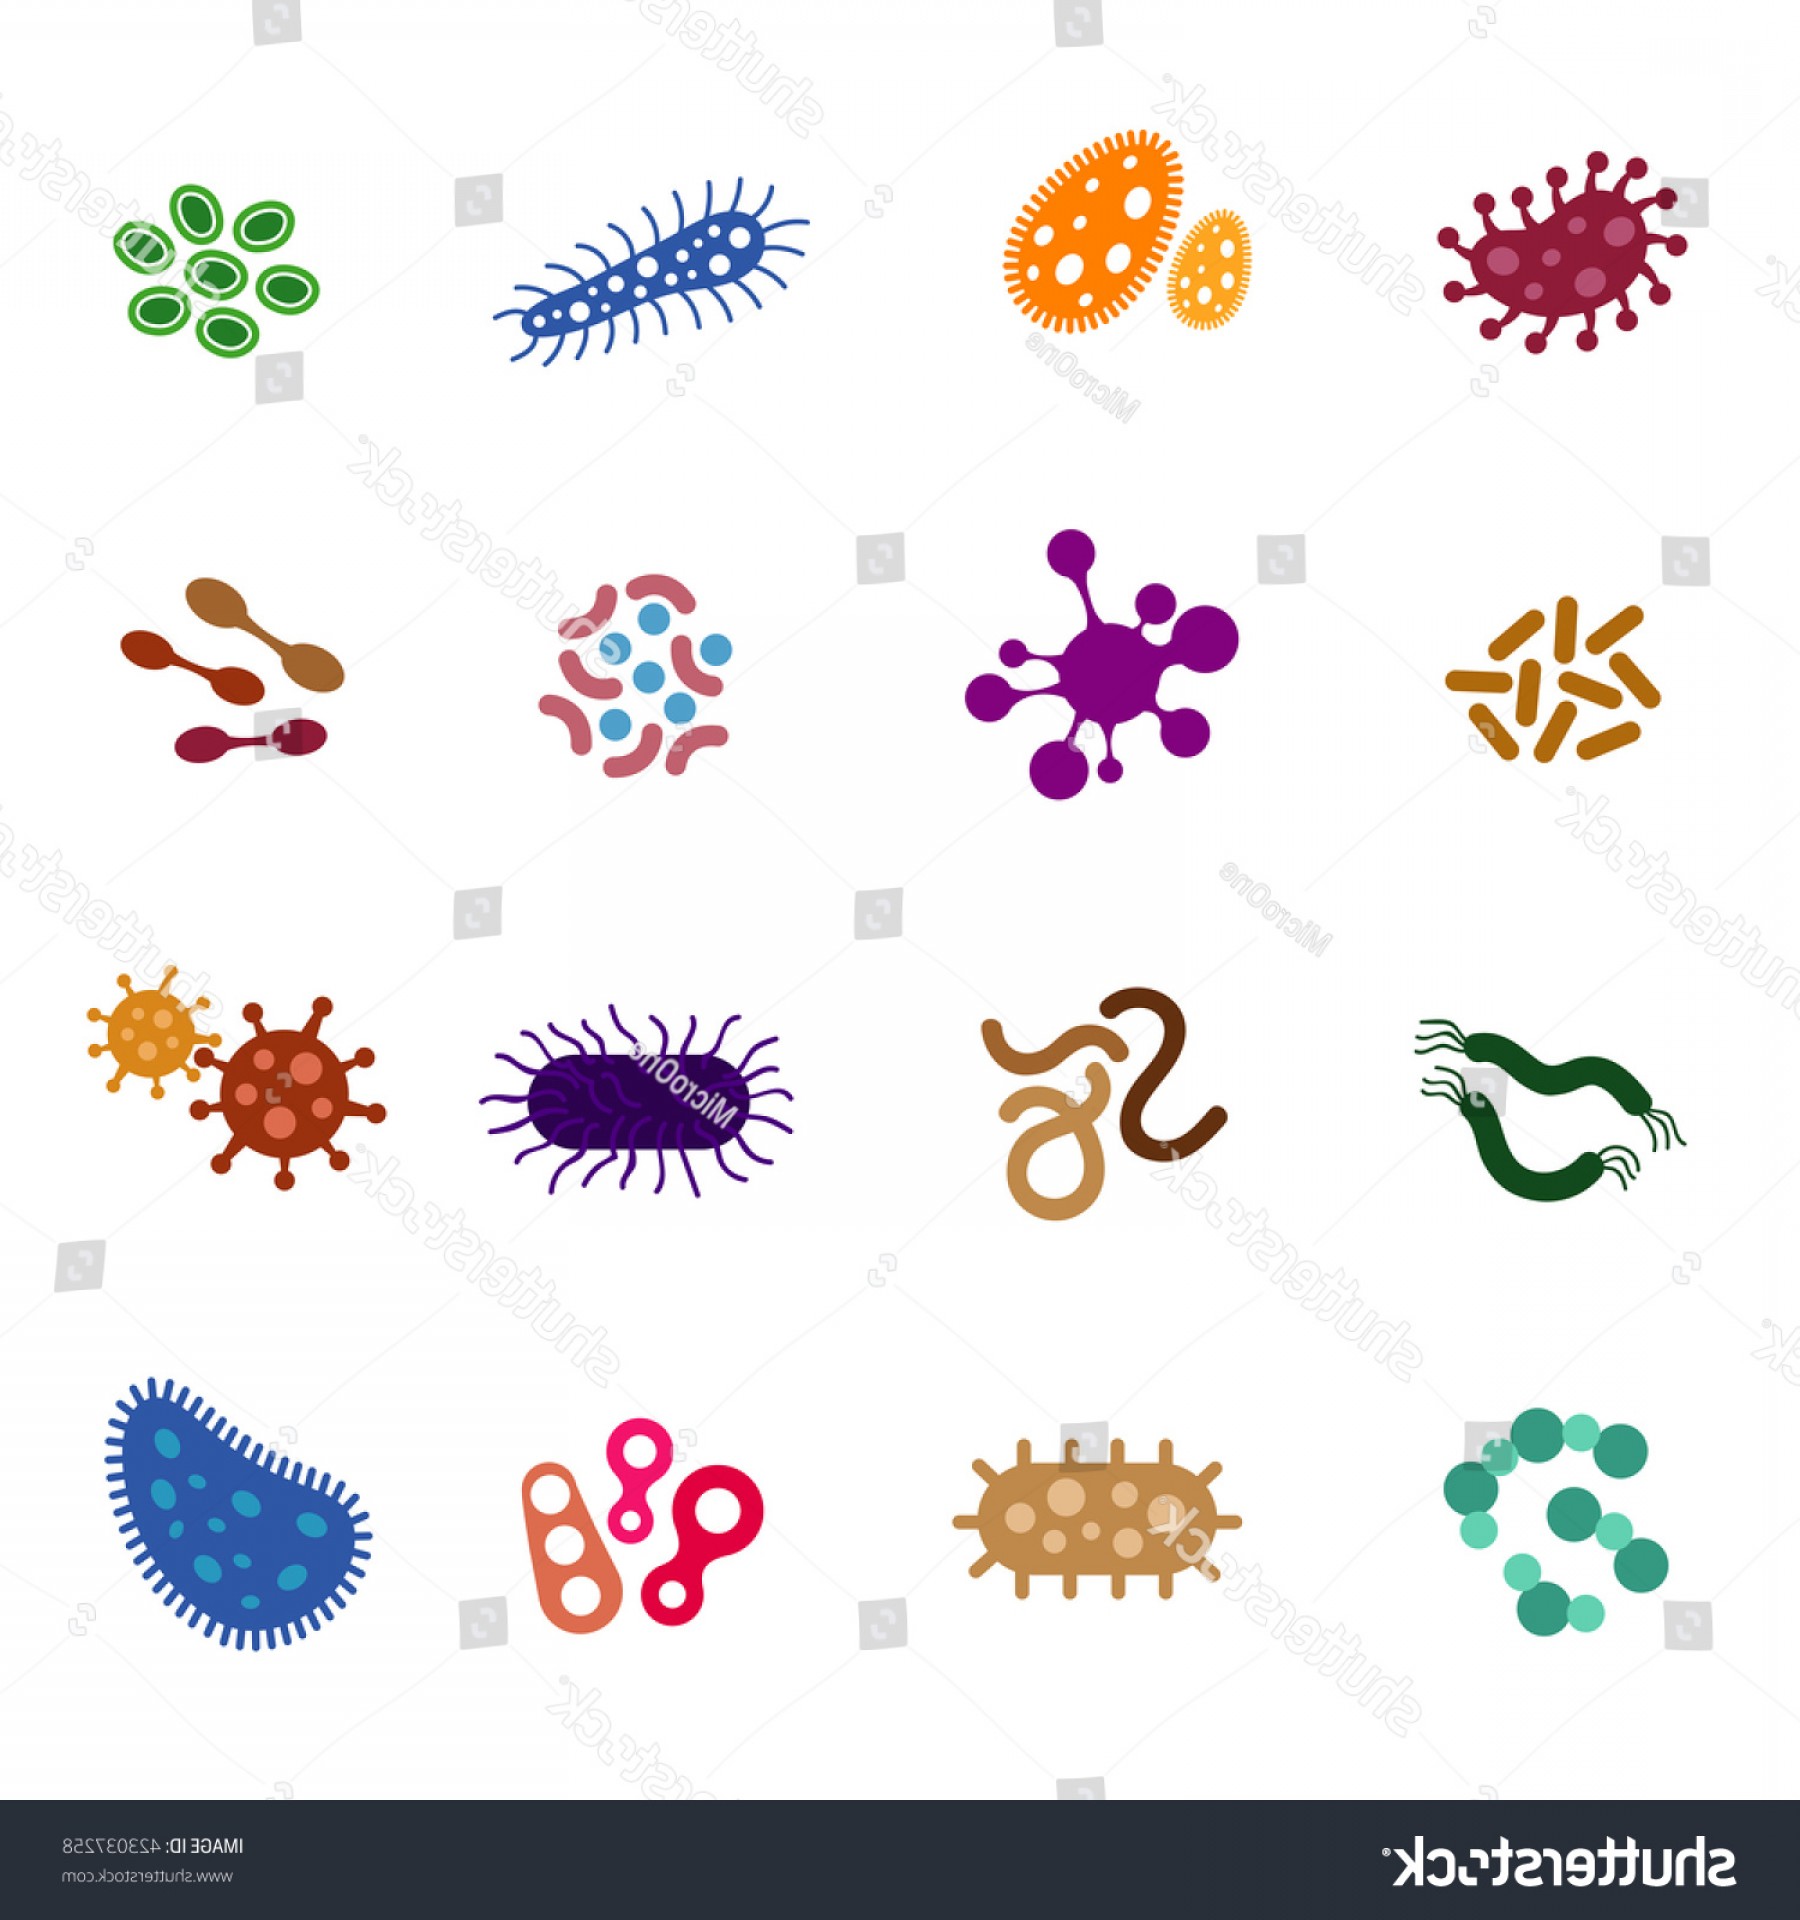 biology clipart microorganism